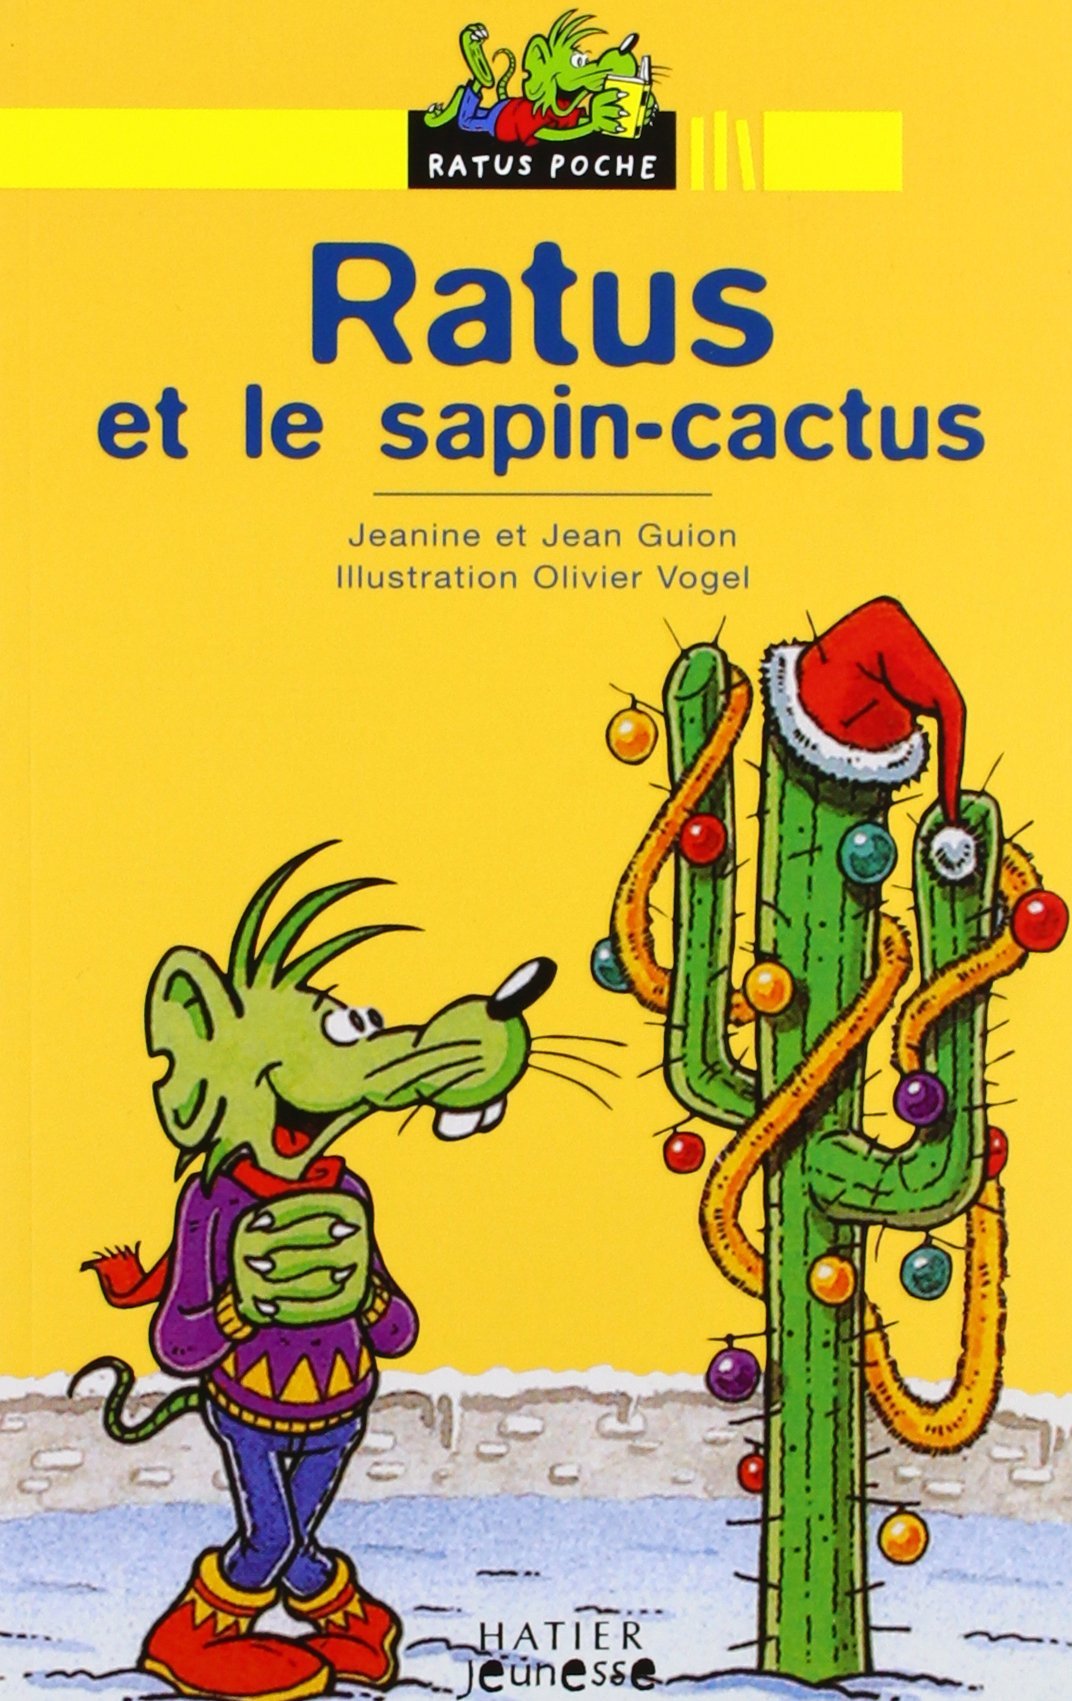 Ratus poche # 29 : Ratus et le sapin-cactus